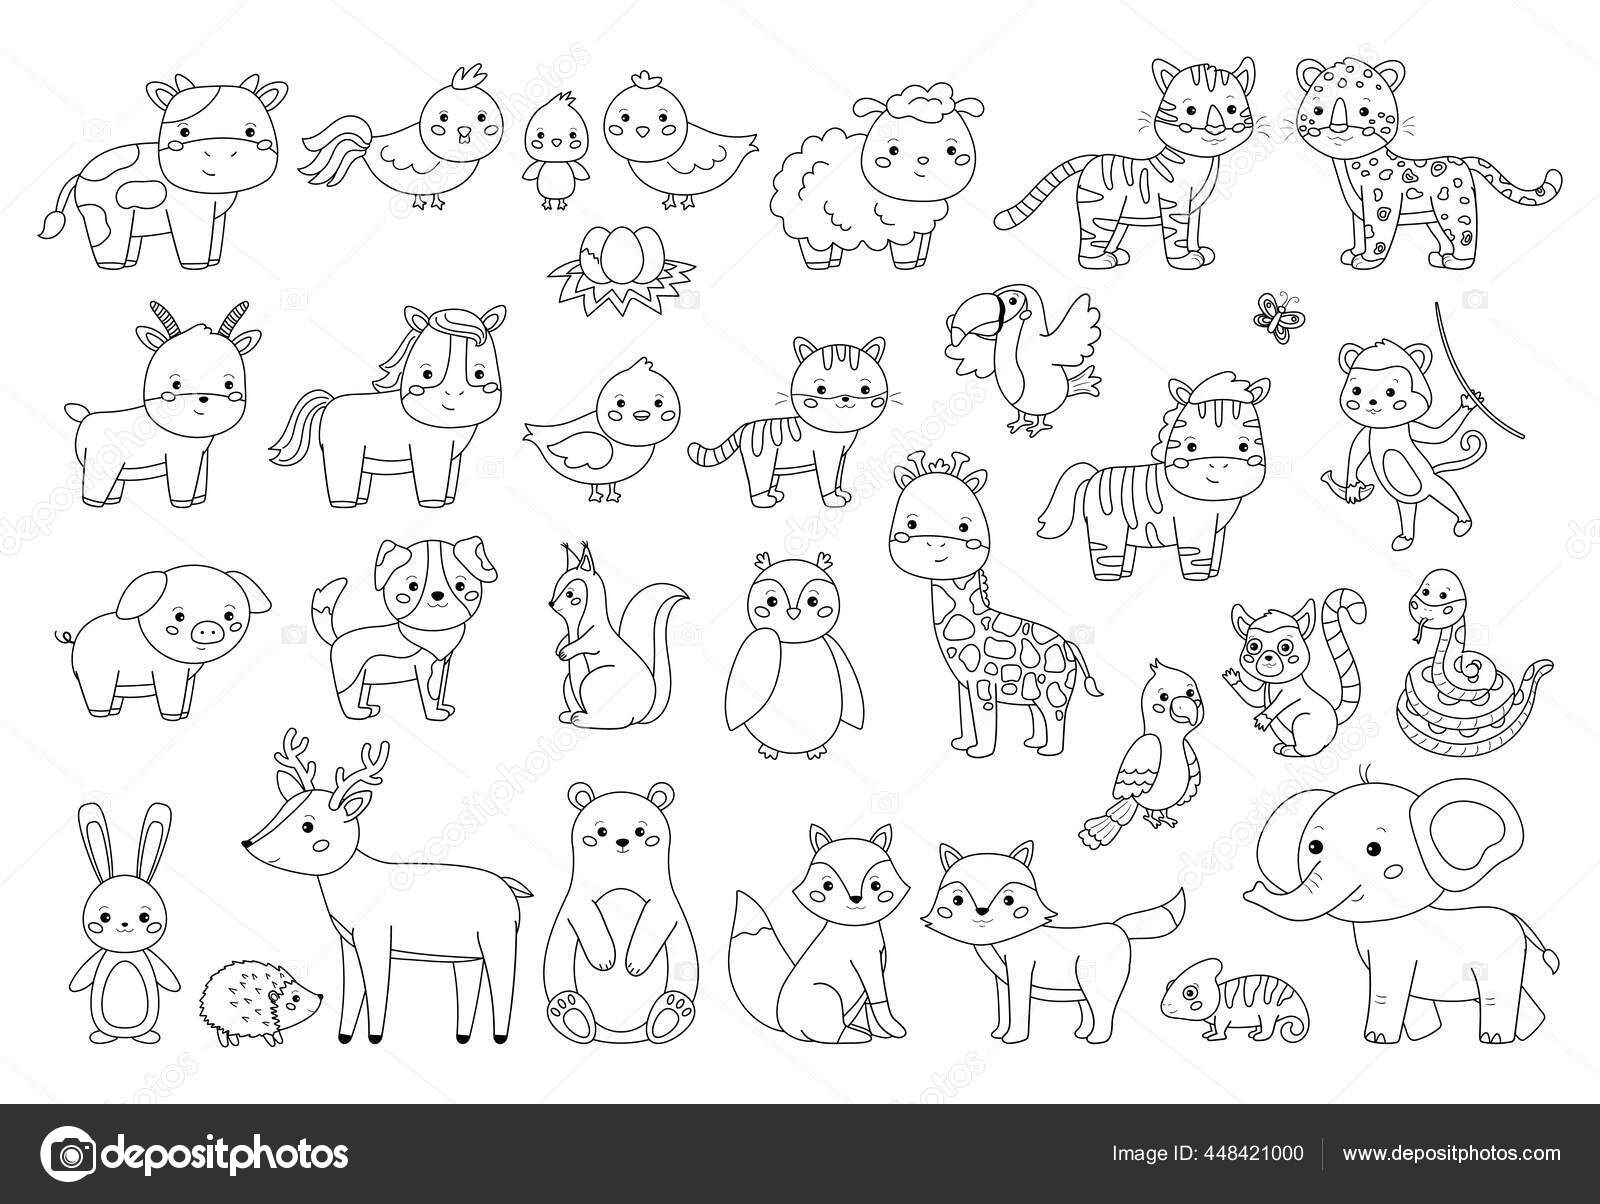 dessiner de jolies illustrations de nourriture kawaii, d'animaux, d'objets